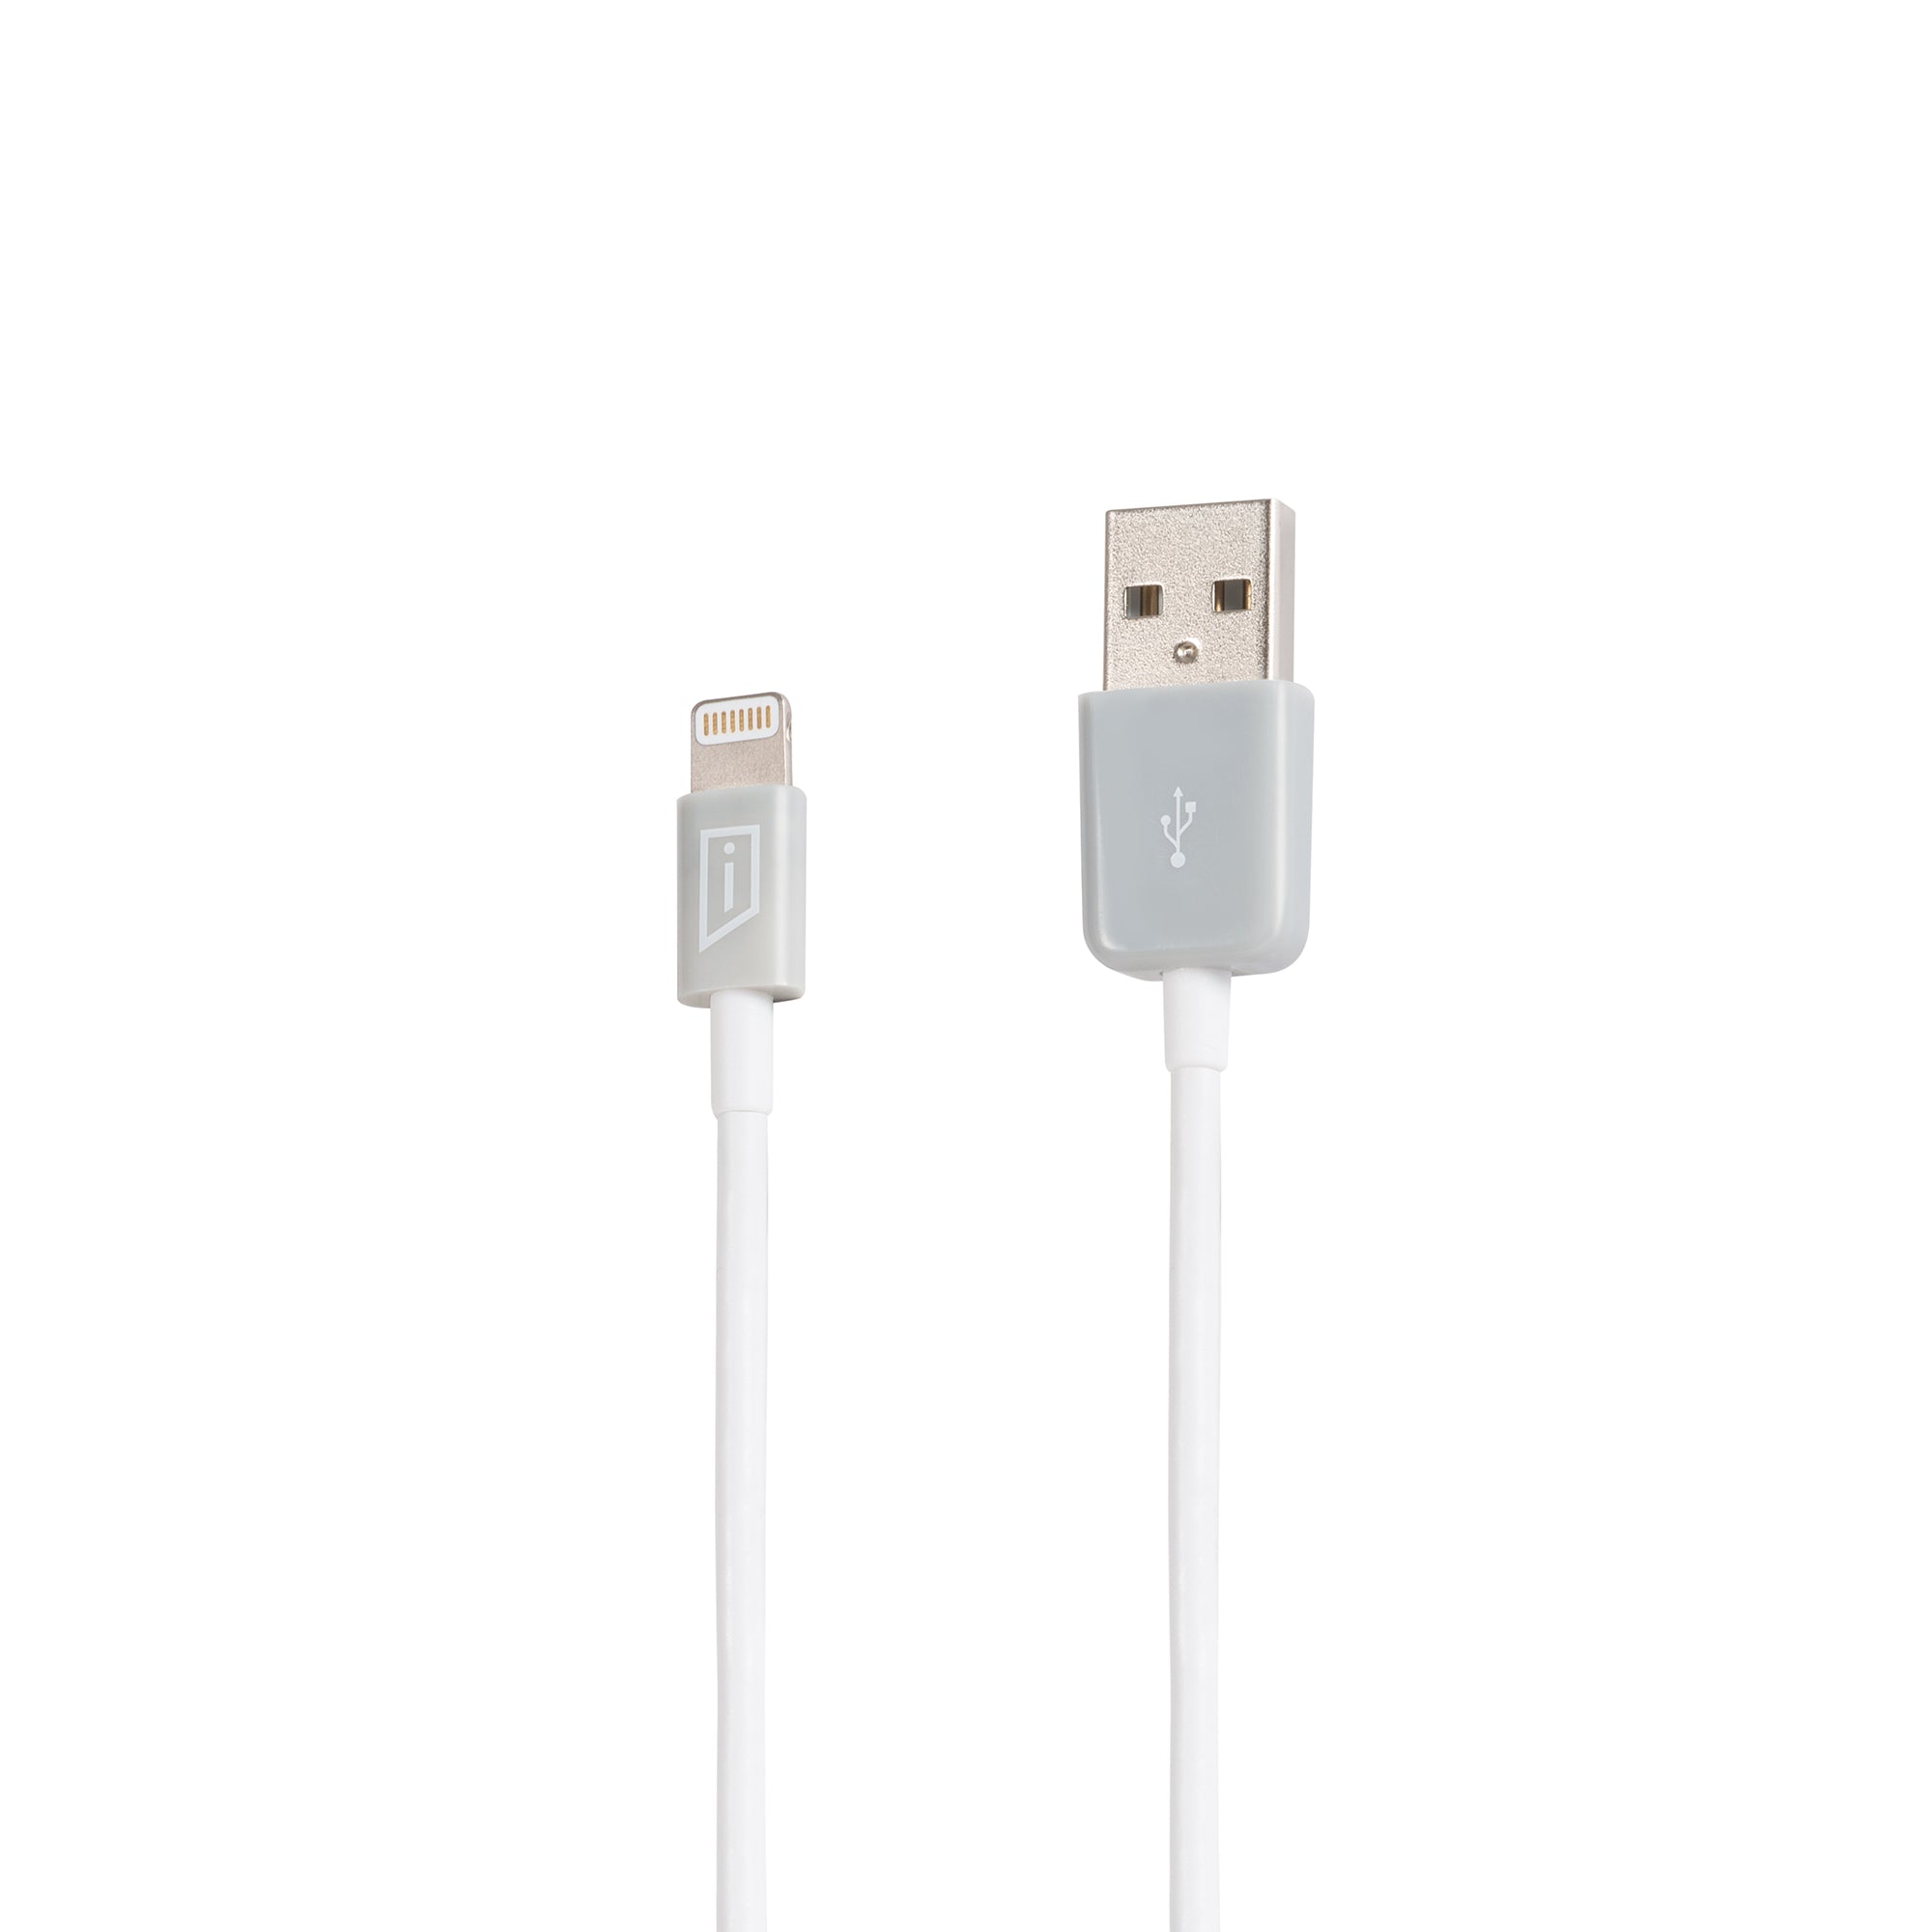 Cable Lightning Apple Original iPhone USB a Lightning – itech